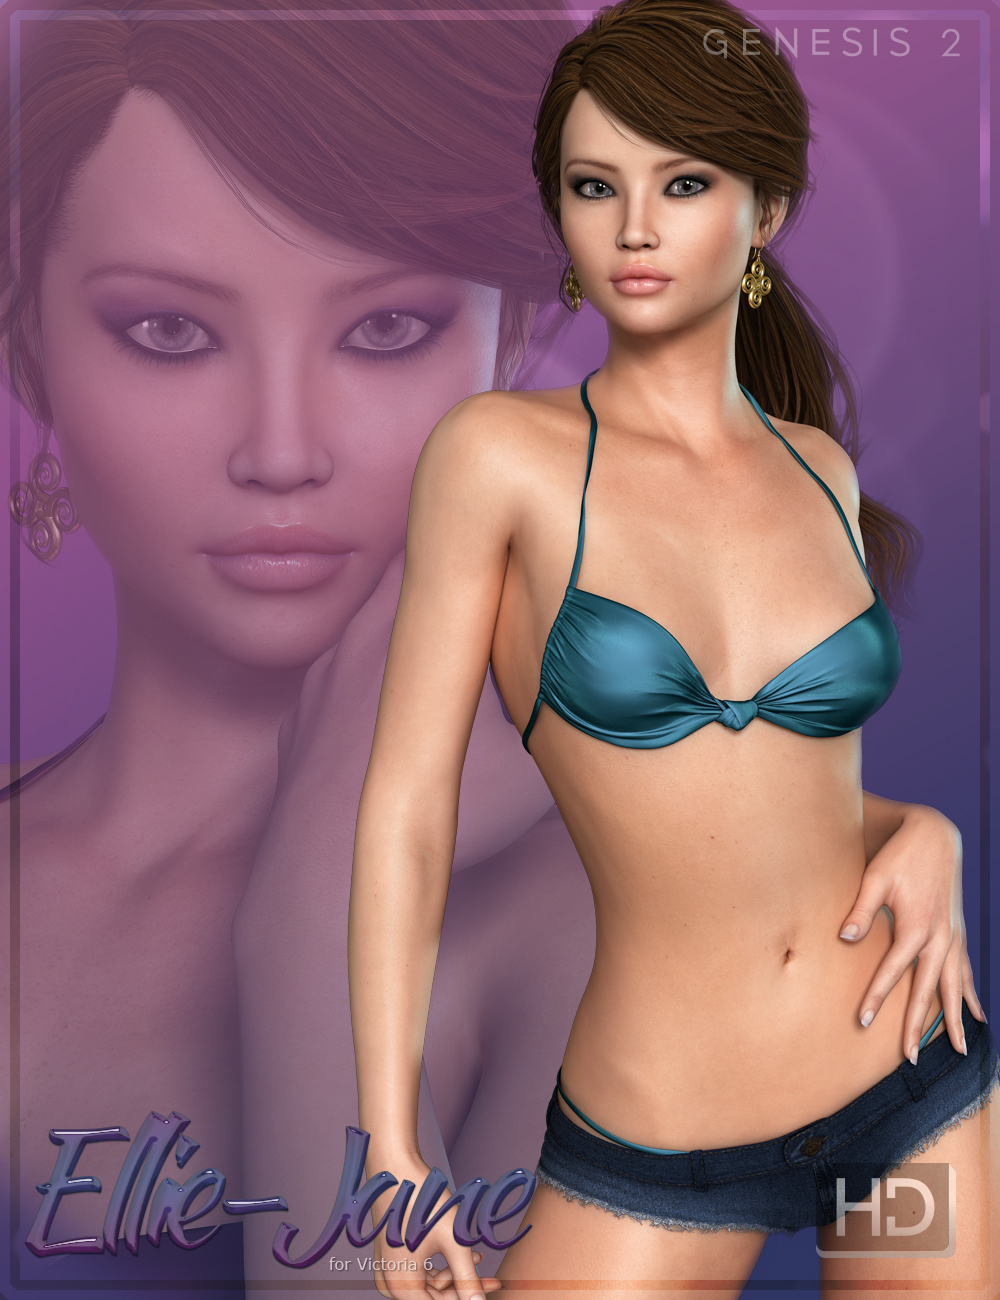 FW Ellie-Jane HD for Victoria 6 by: Fred Winkler ArtFisty & Darc, 3D Models by Daz 3D